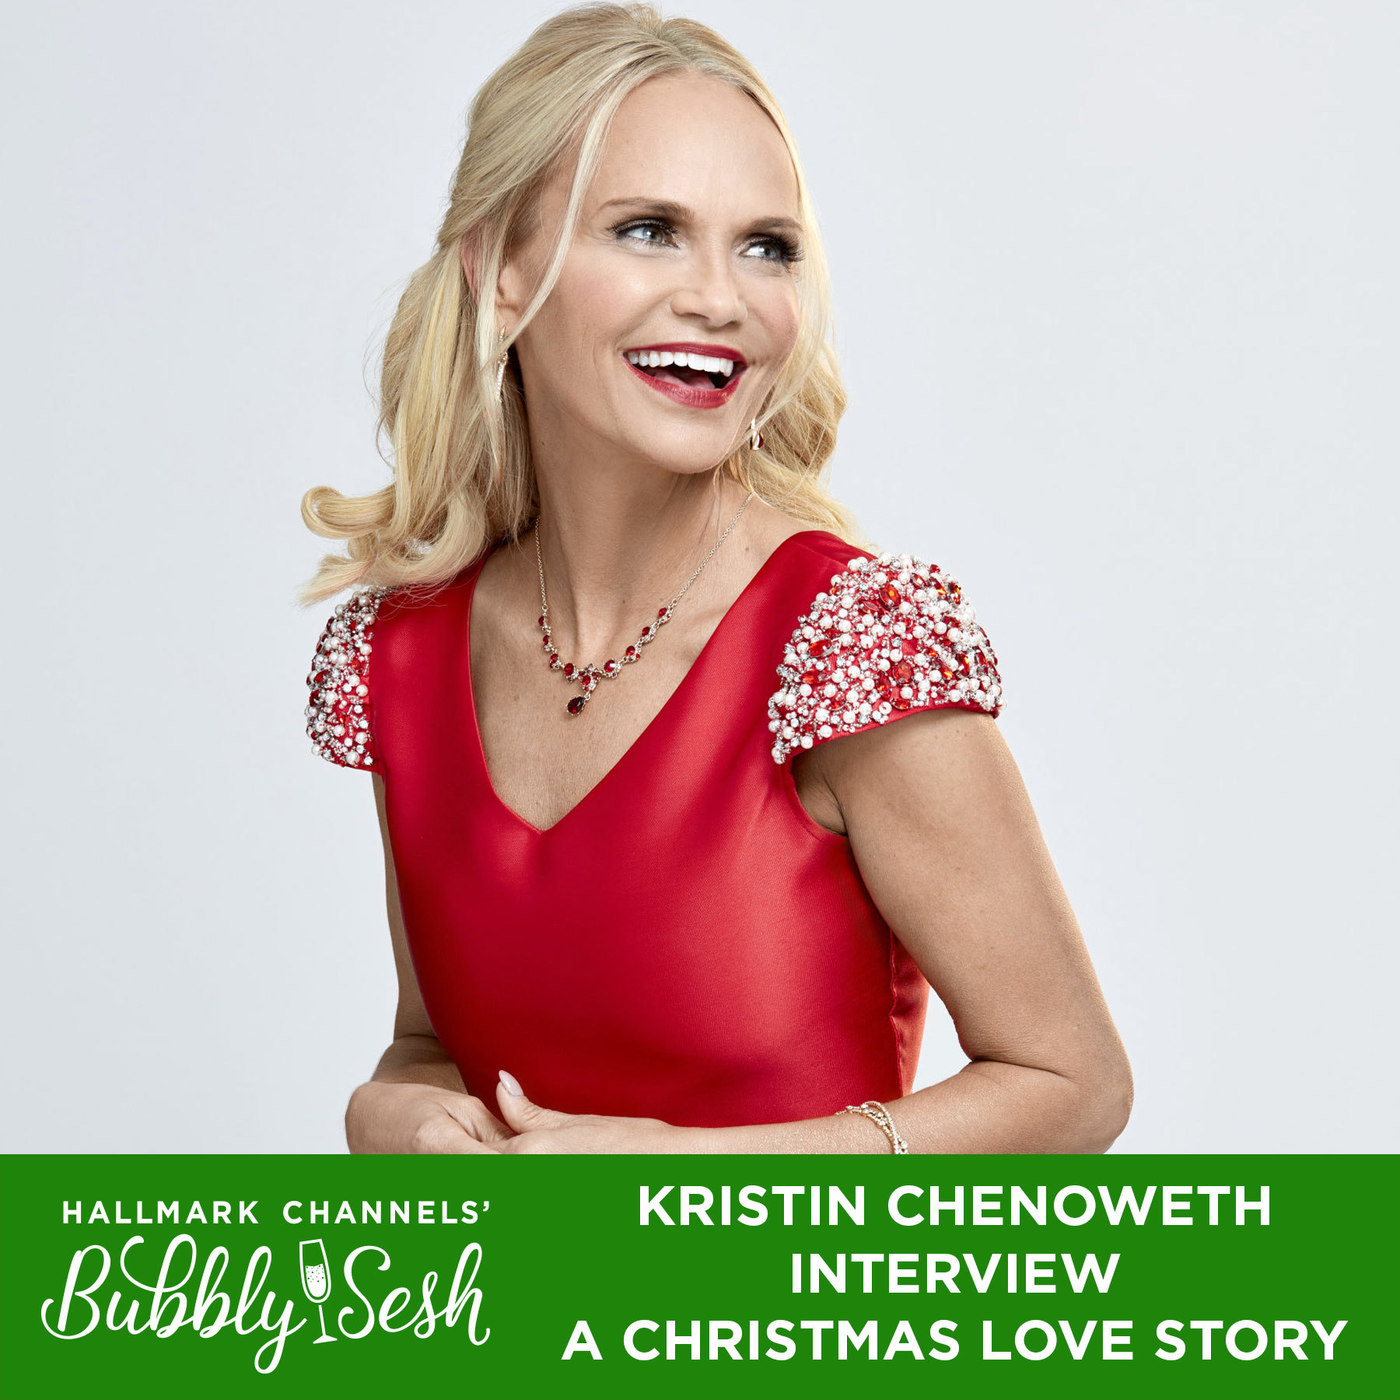 Kristin Chenoweth Interview, A Christmas Love Story